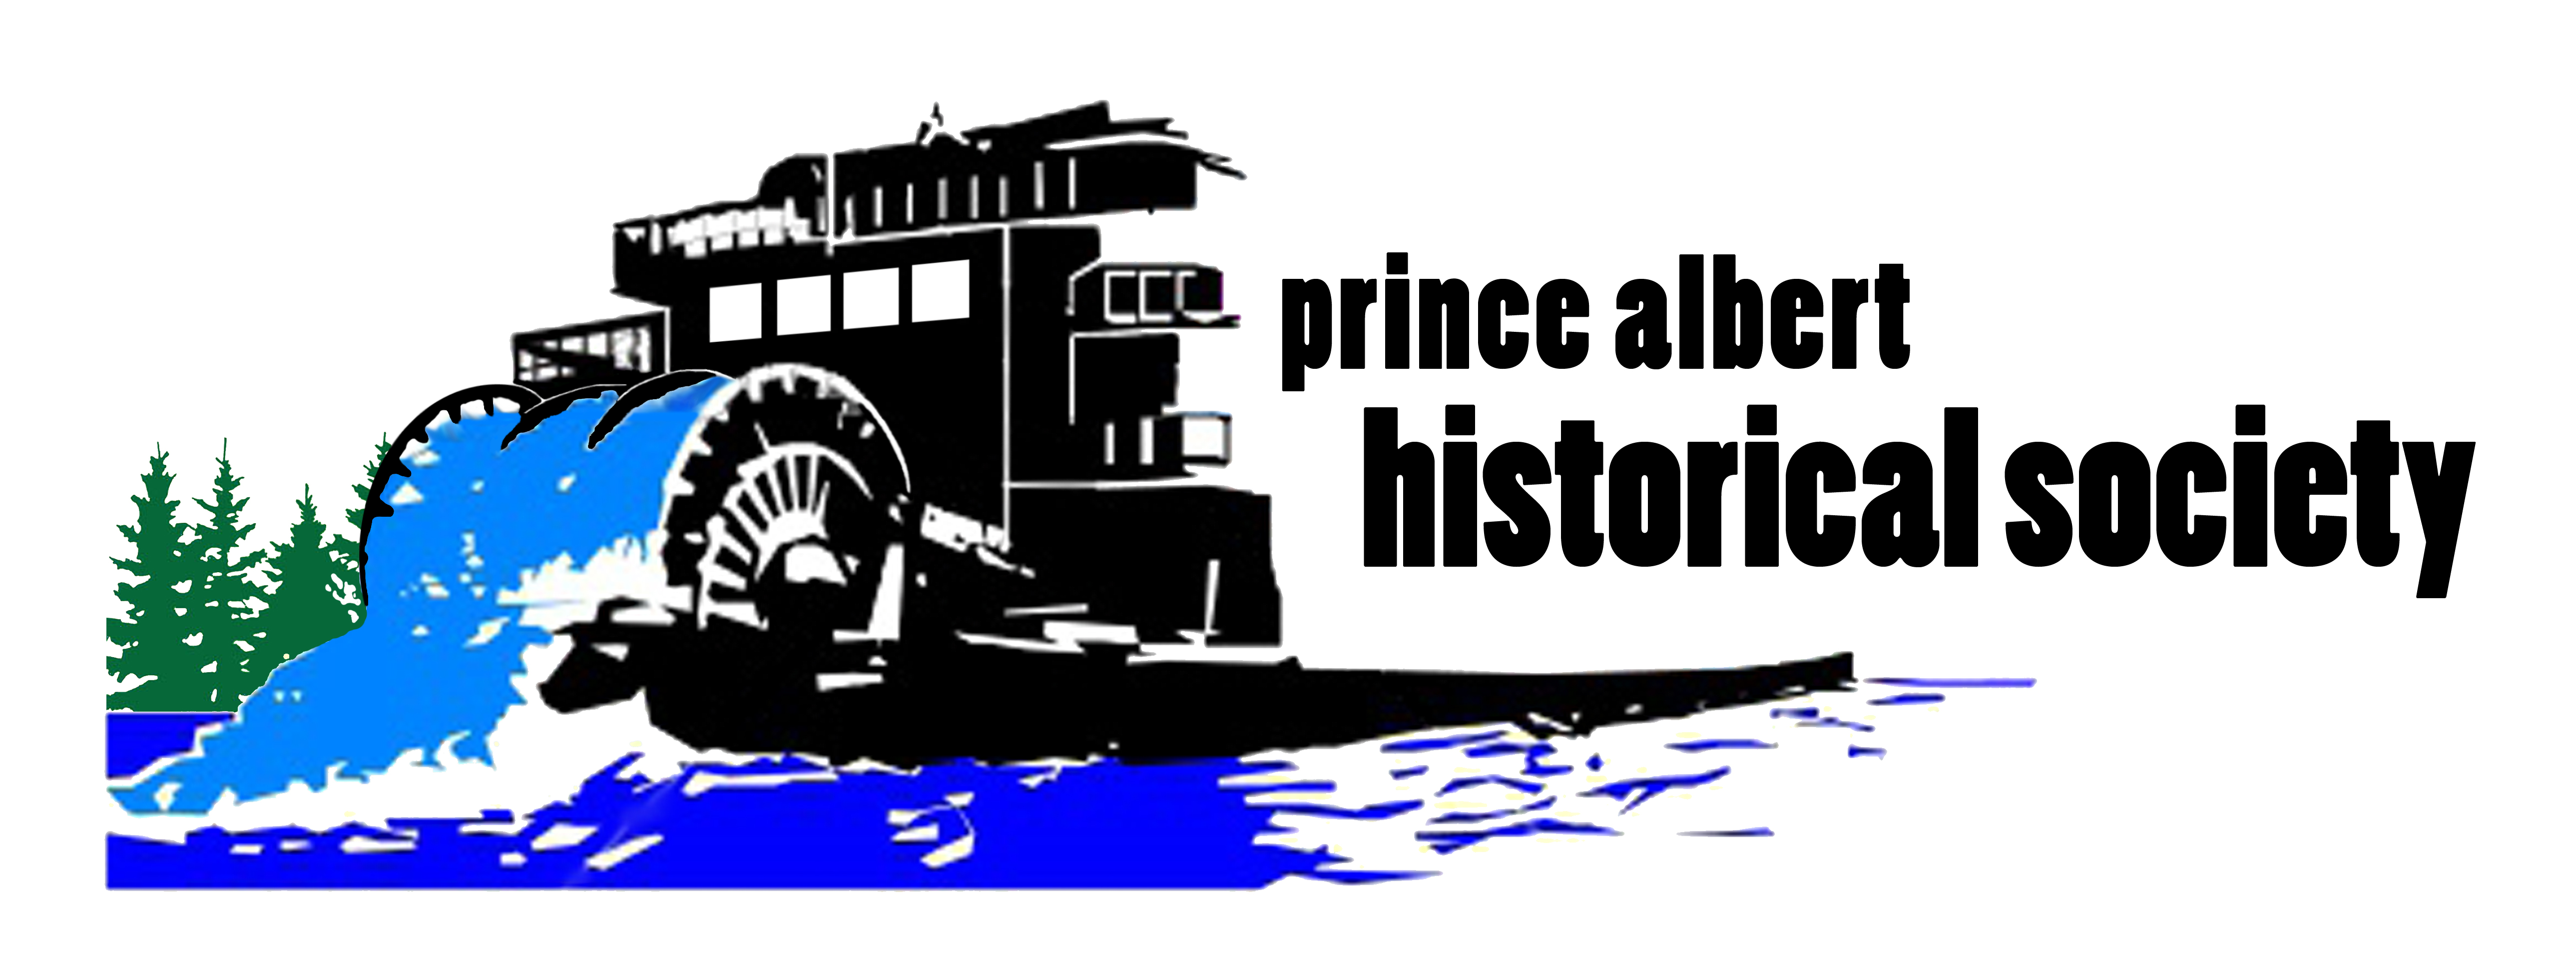 Prince Albert Historical Society logo